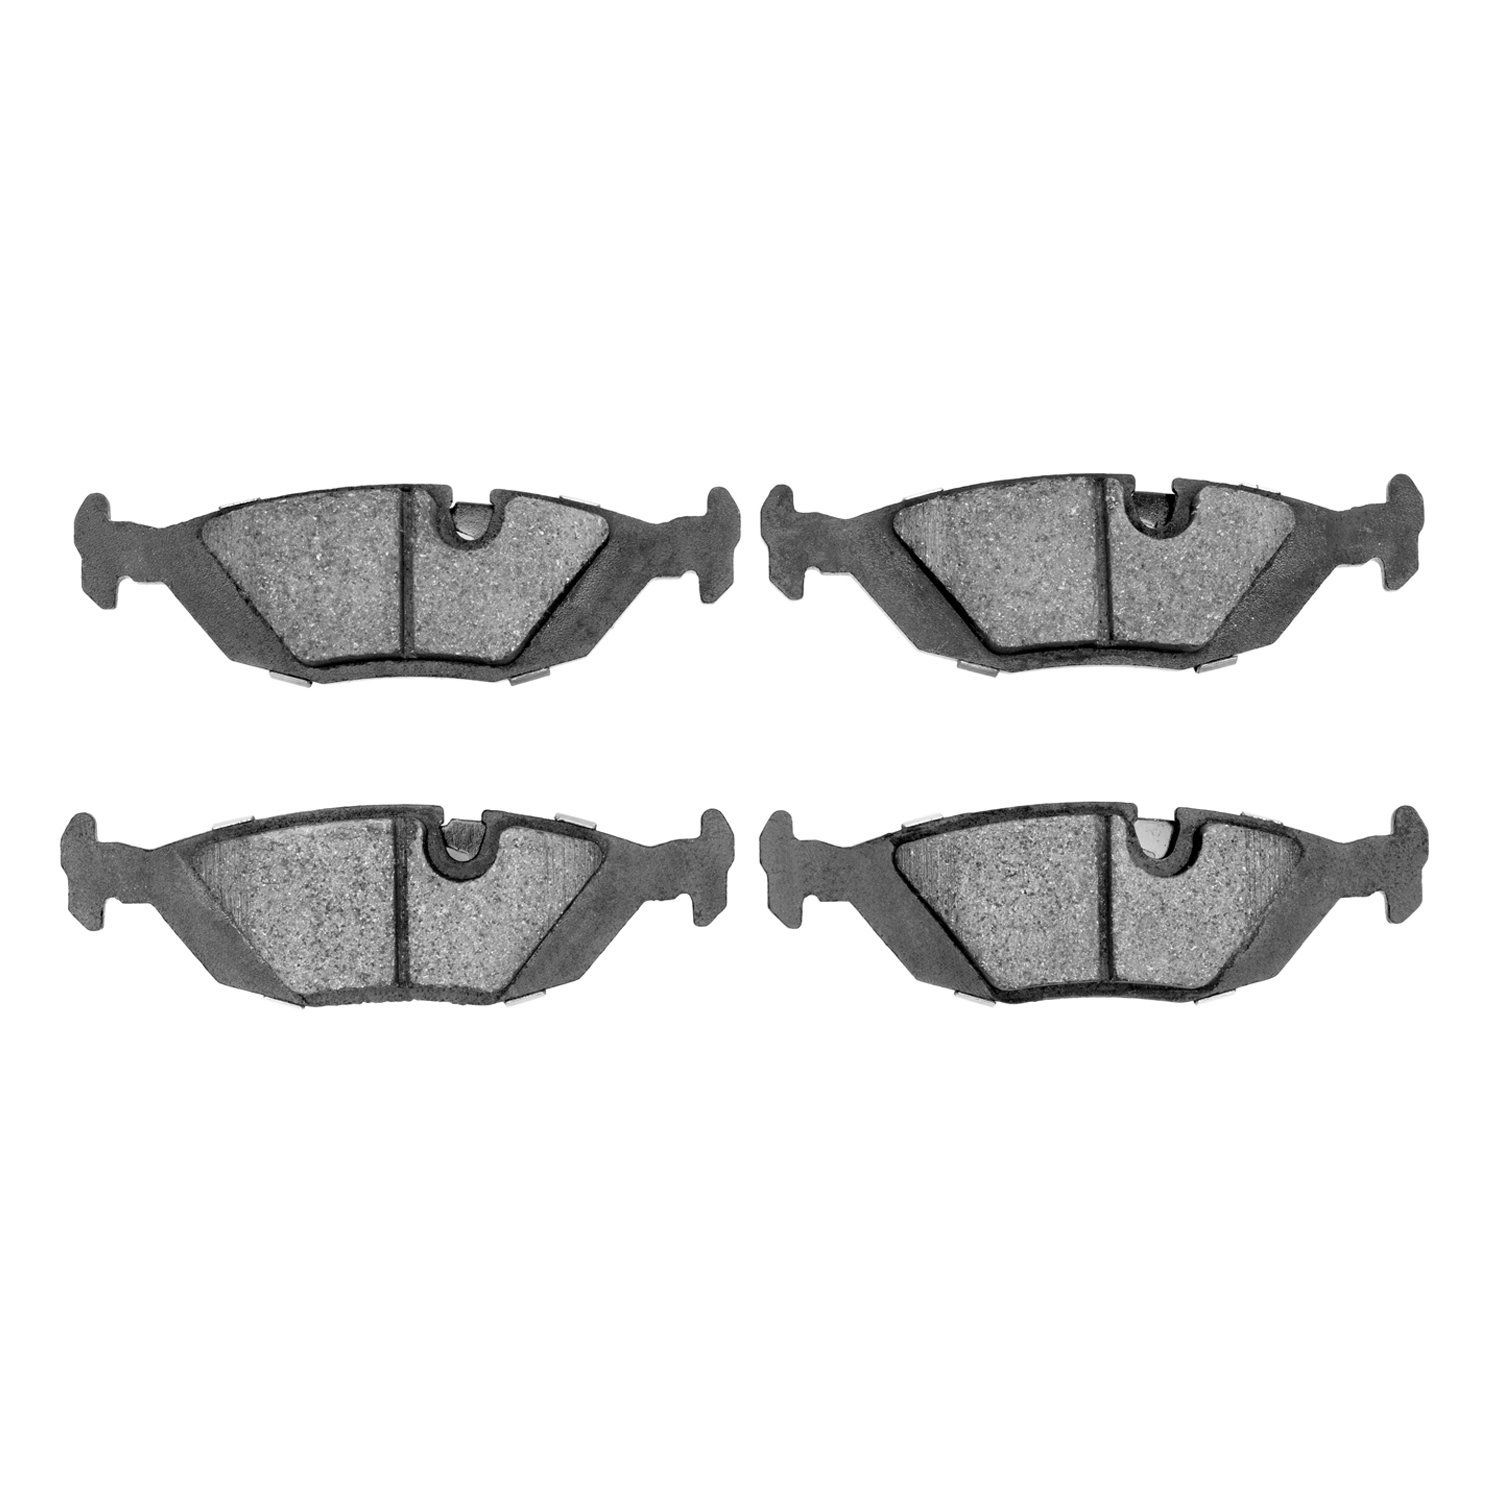 Semi-Metallic Brake Pads, 1981-1991 BMW, Position: Rear